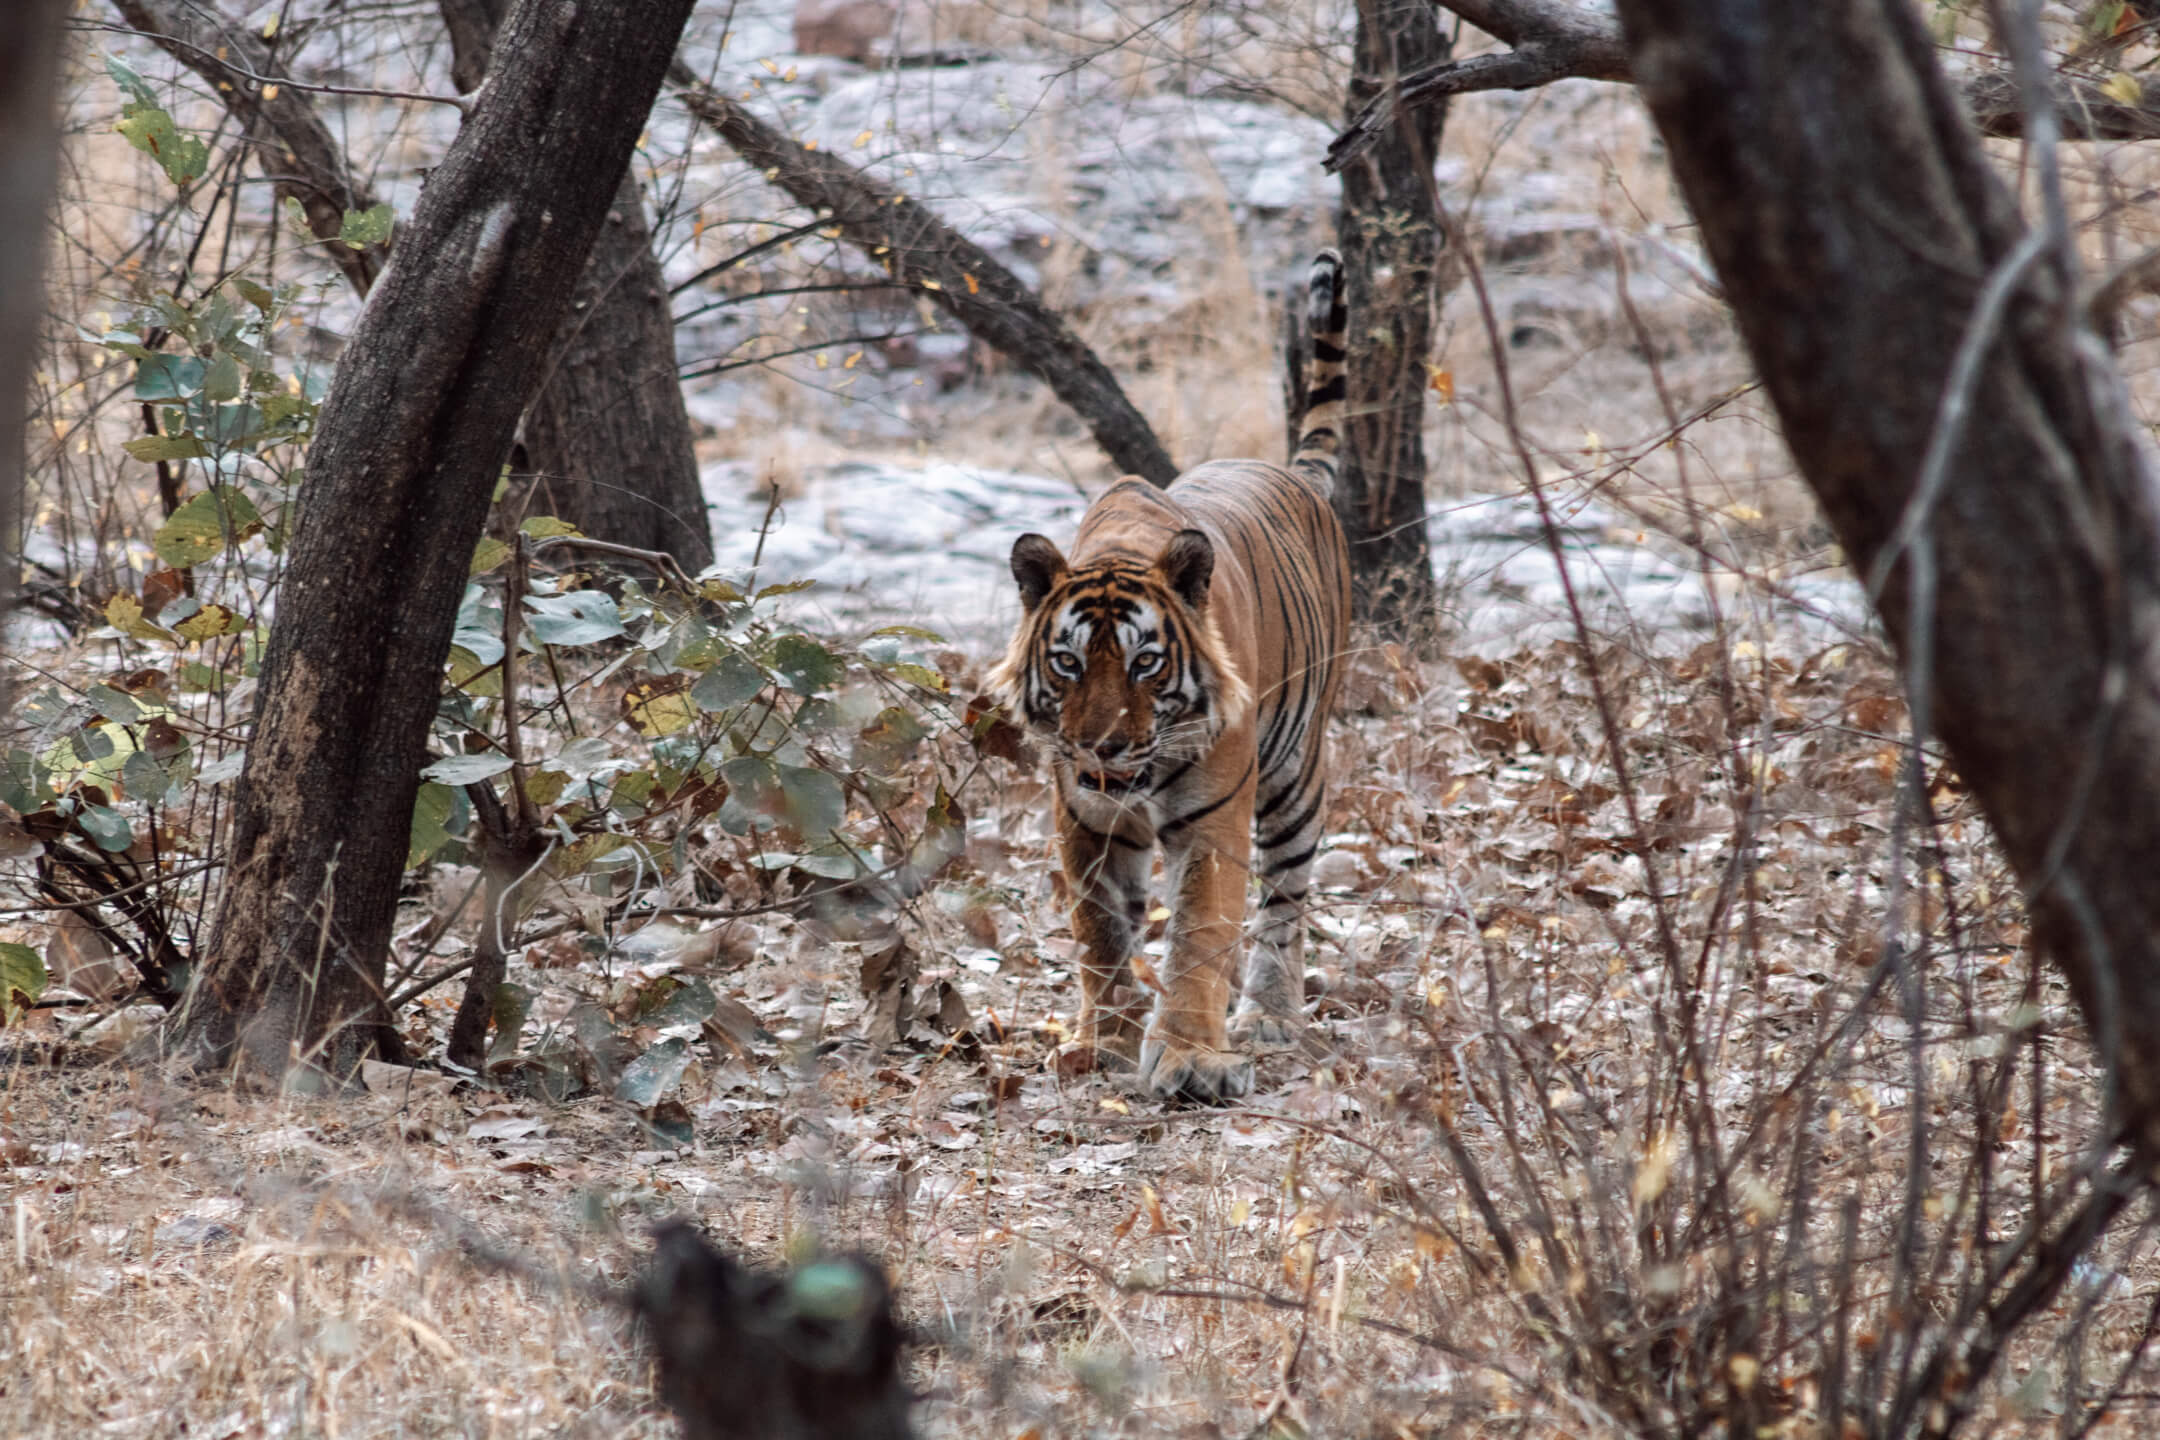 Ranthambore Safari – Seeing Wild Tigers In India (Bucket List Experience)